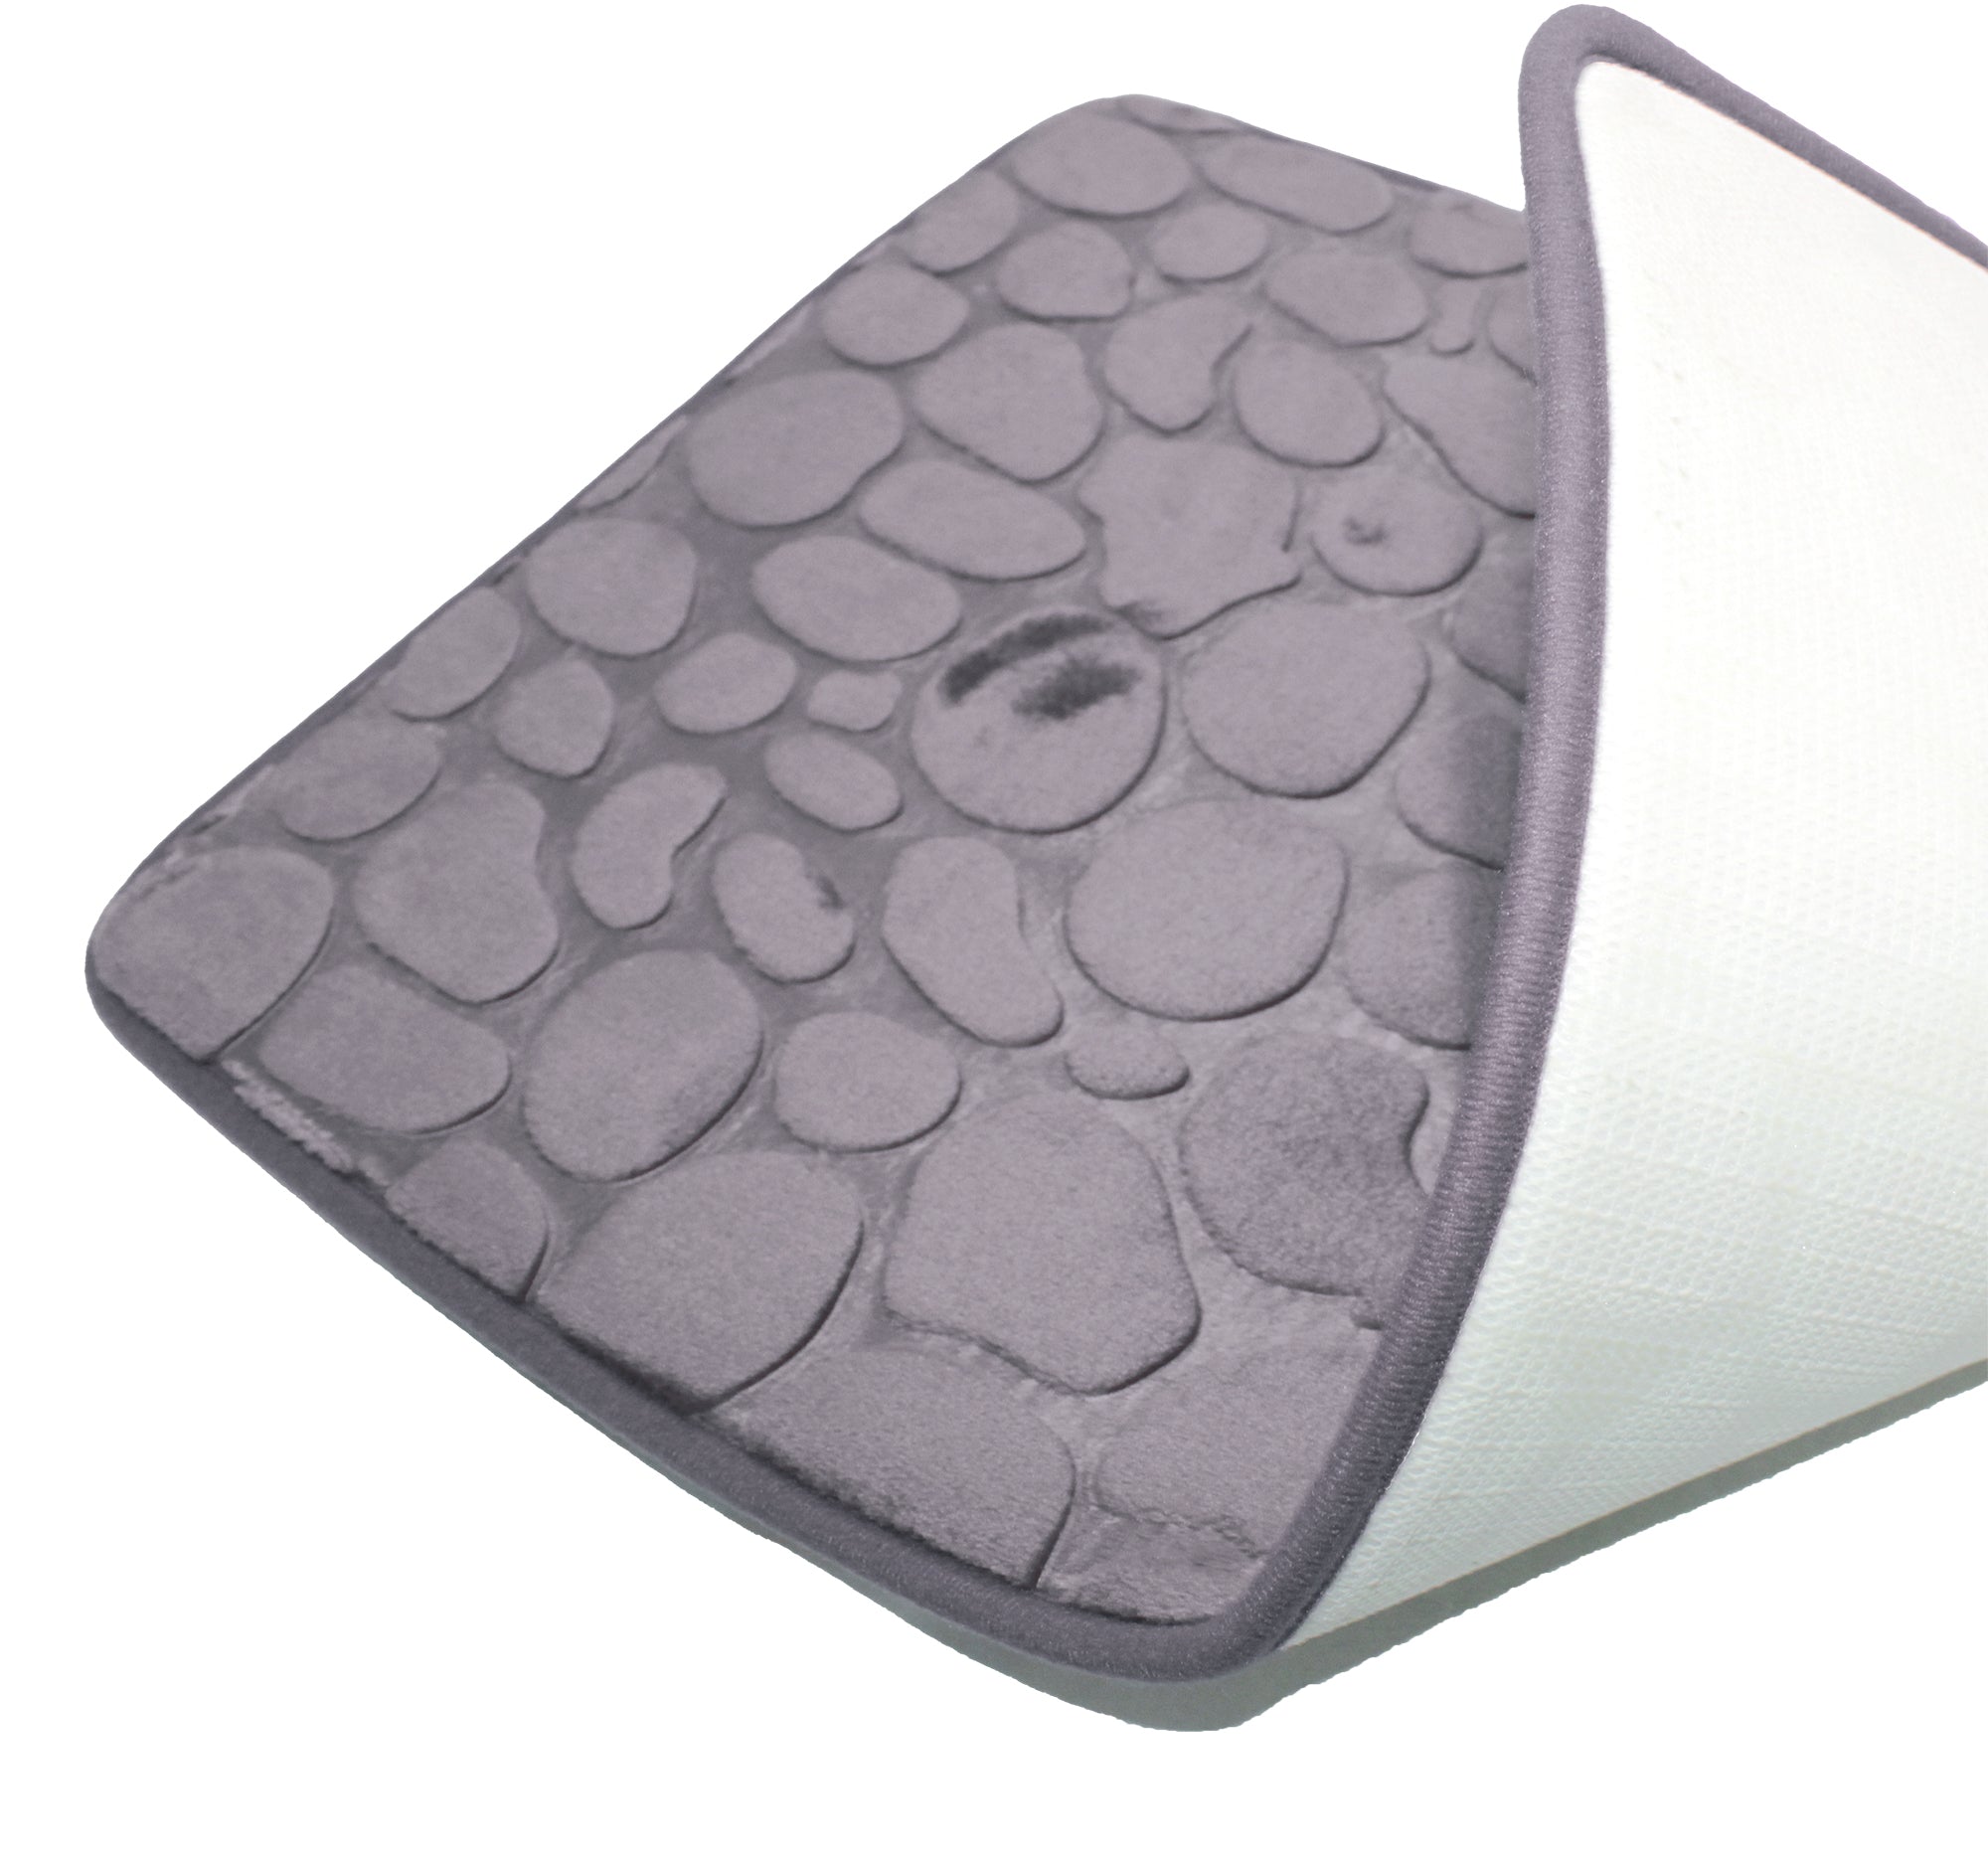 75x45cm Plush Cobblestone Embossed Memory Foam Bathroom Mat